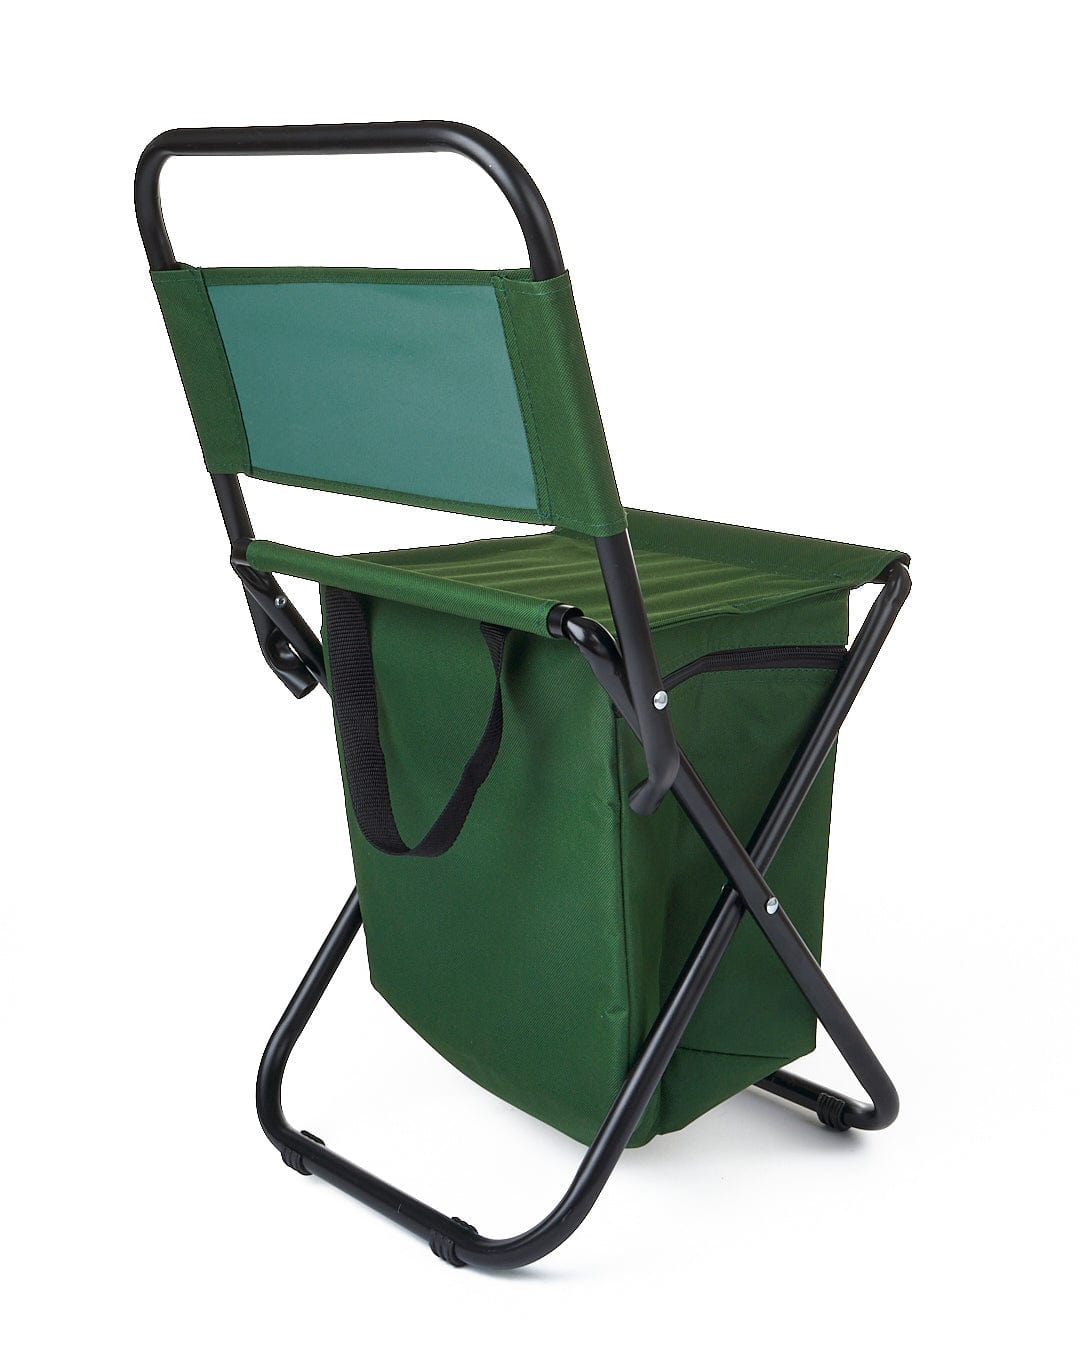 A Saltrock Spectator - Foldable Chair with Cooler Bag - Dark Green.